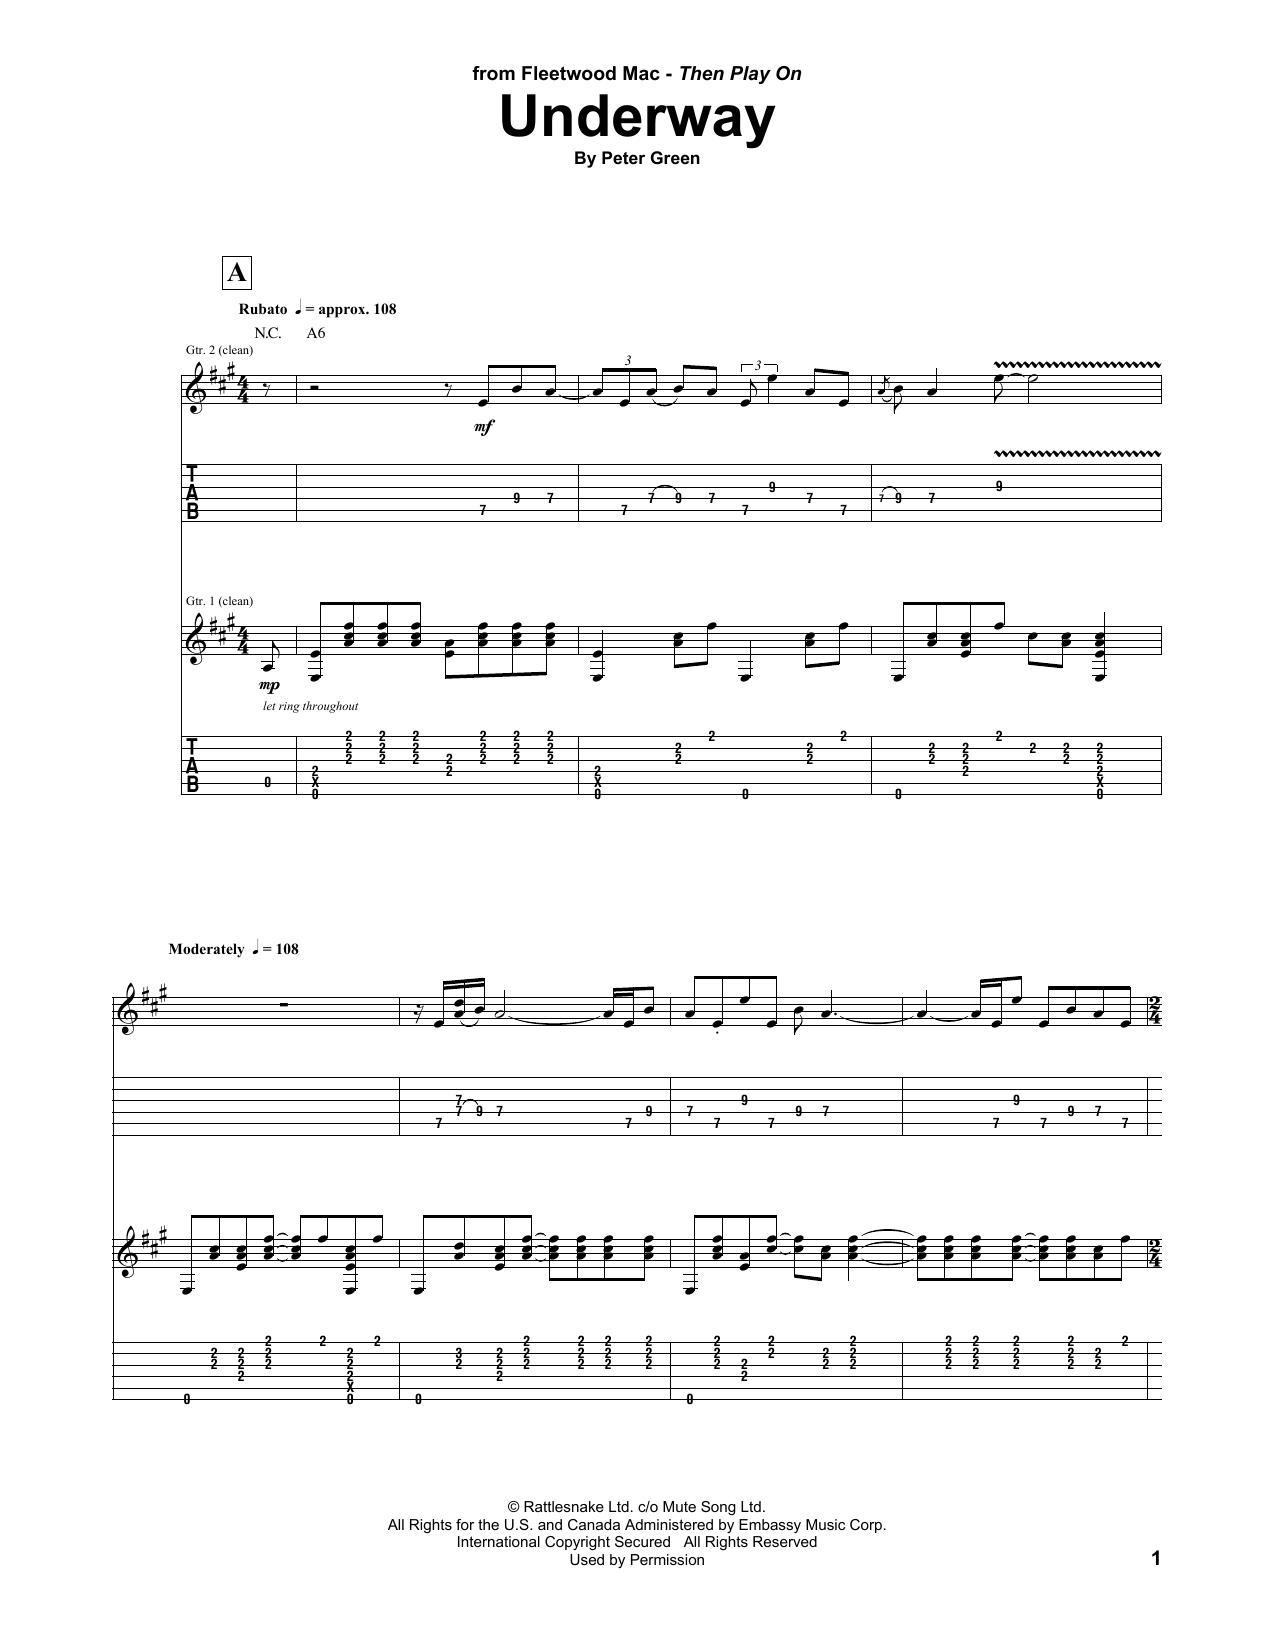 Fleetwood Mac Underway Sheet Music Notes & Chords for Guitar Tab - Download or Print PDF